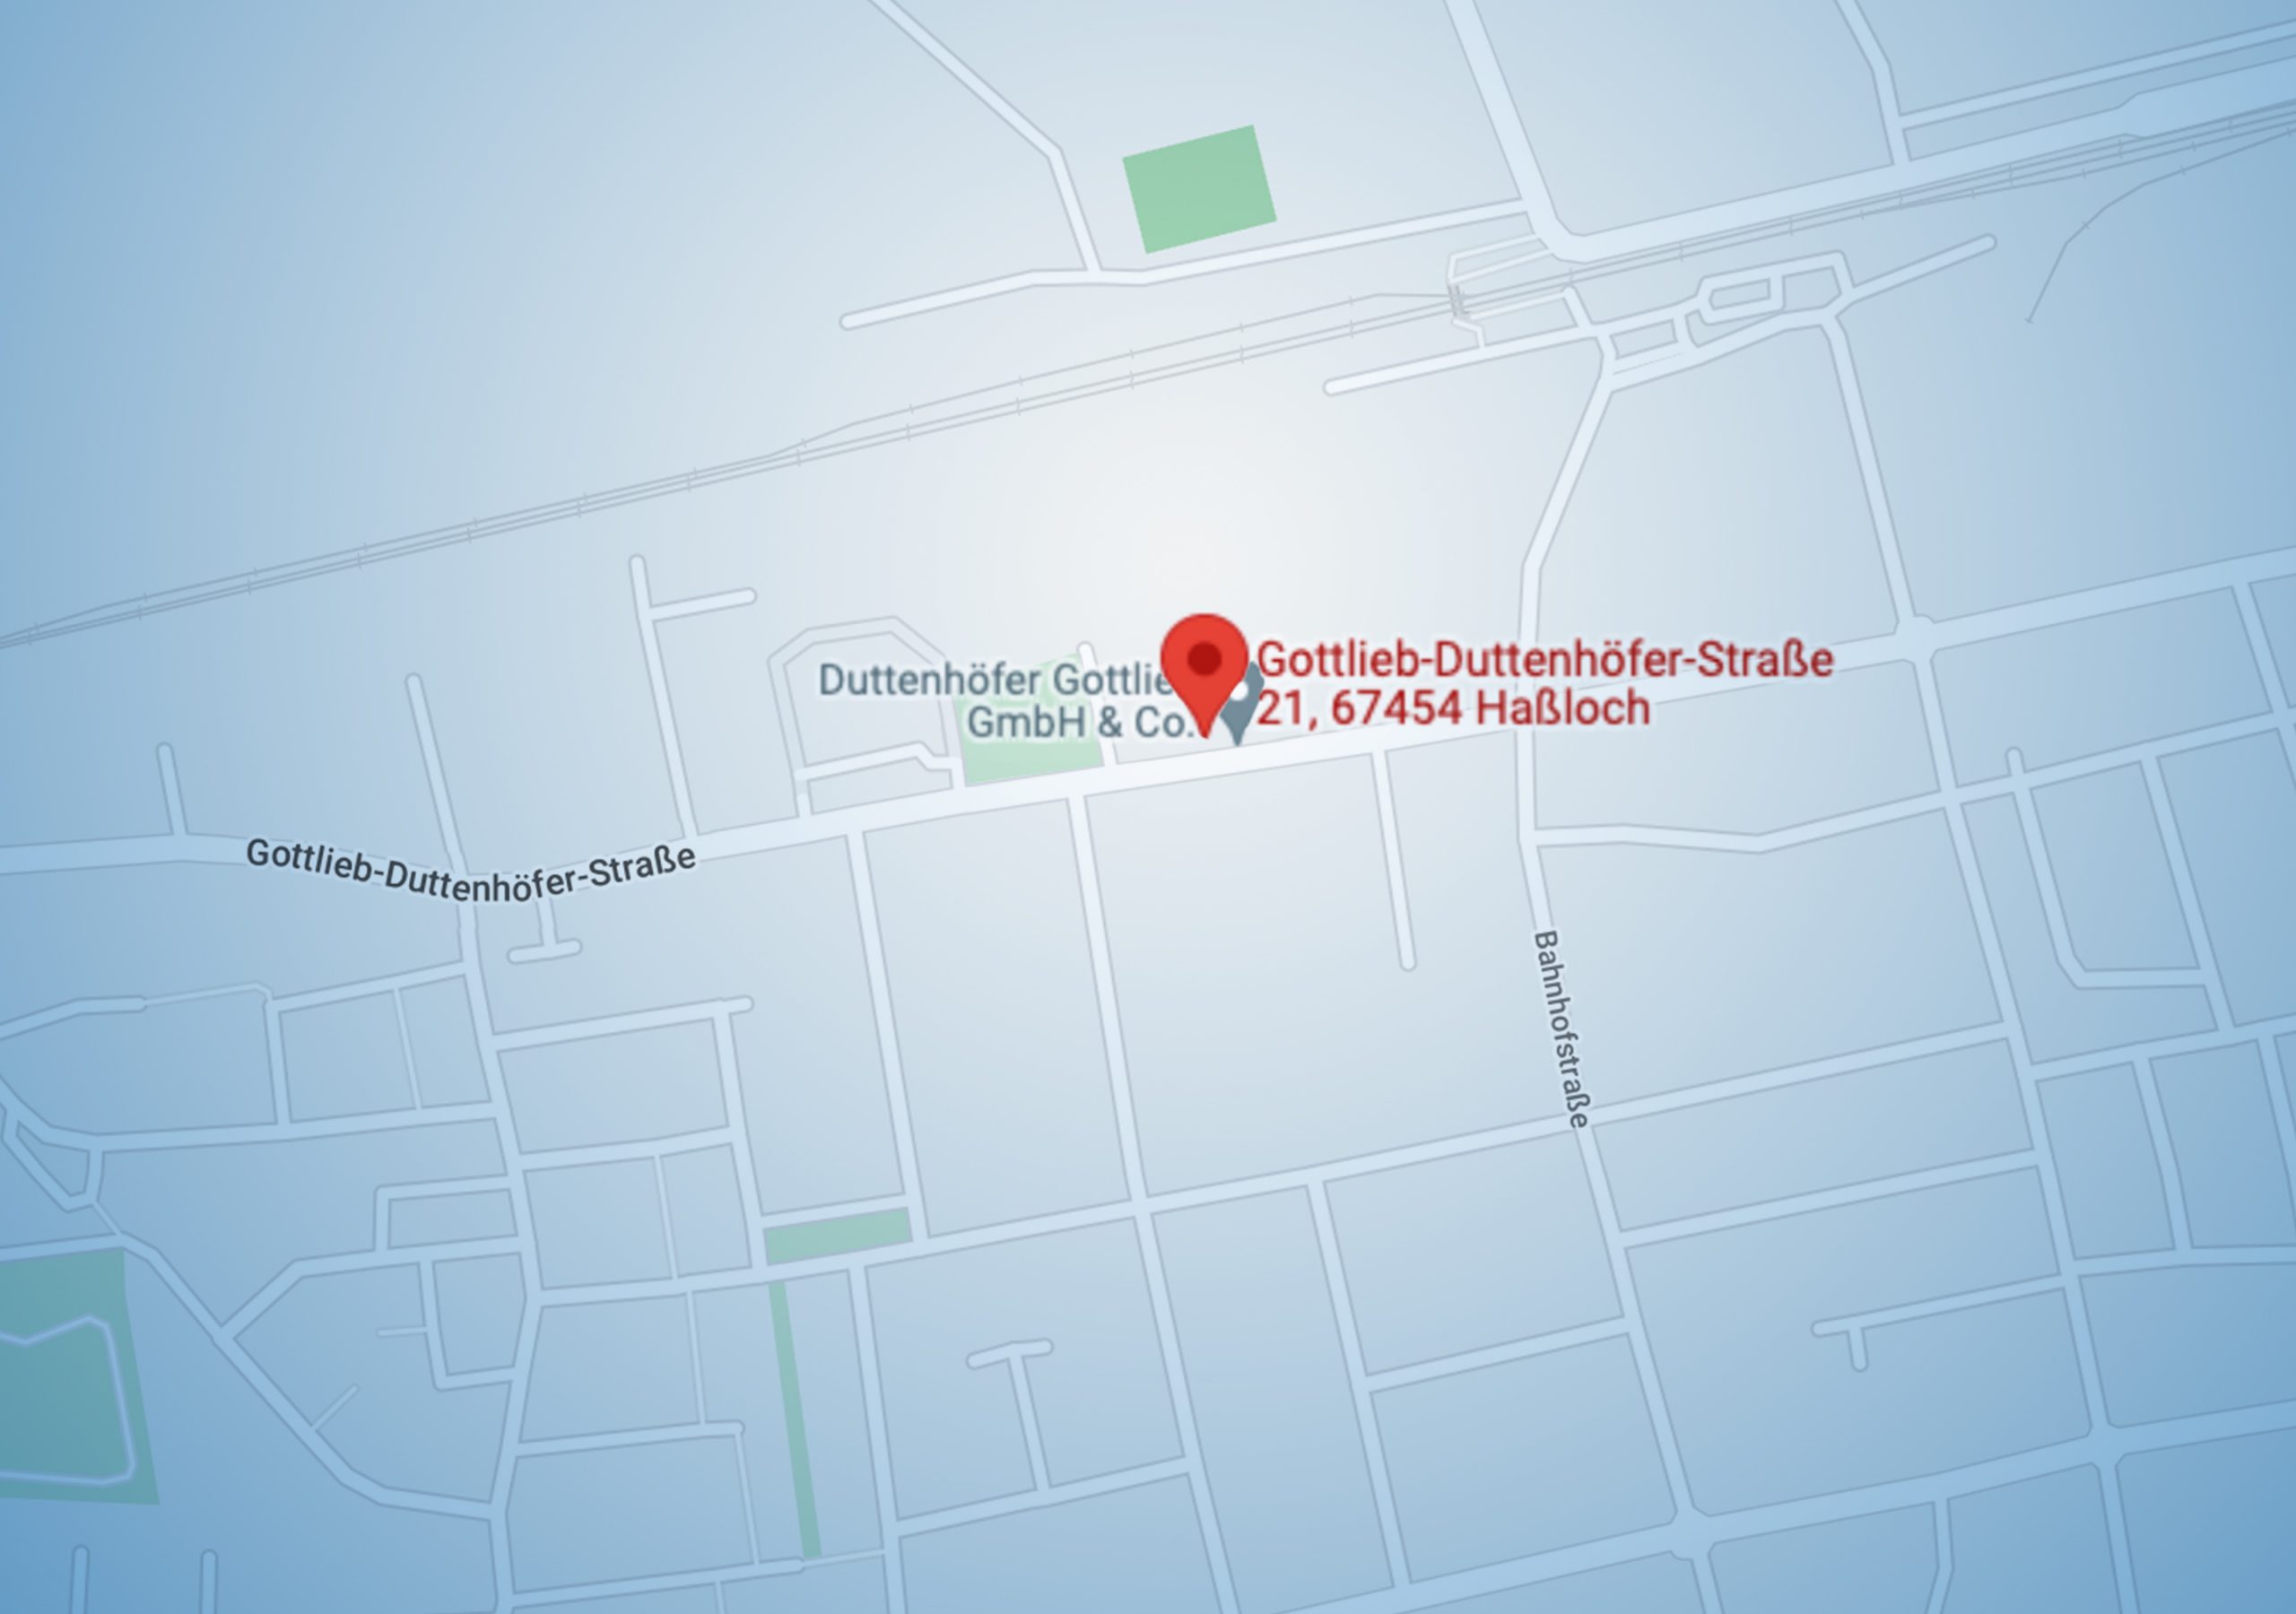 Gottlieb-Duttenhöfer-Straße 21, 67454 Haßloch